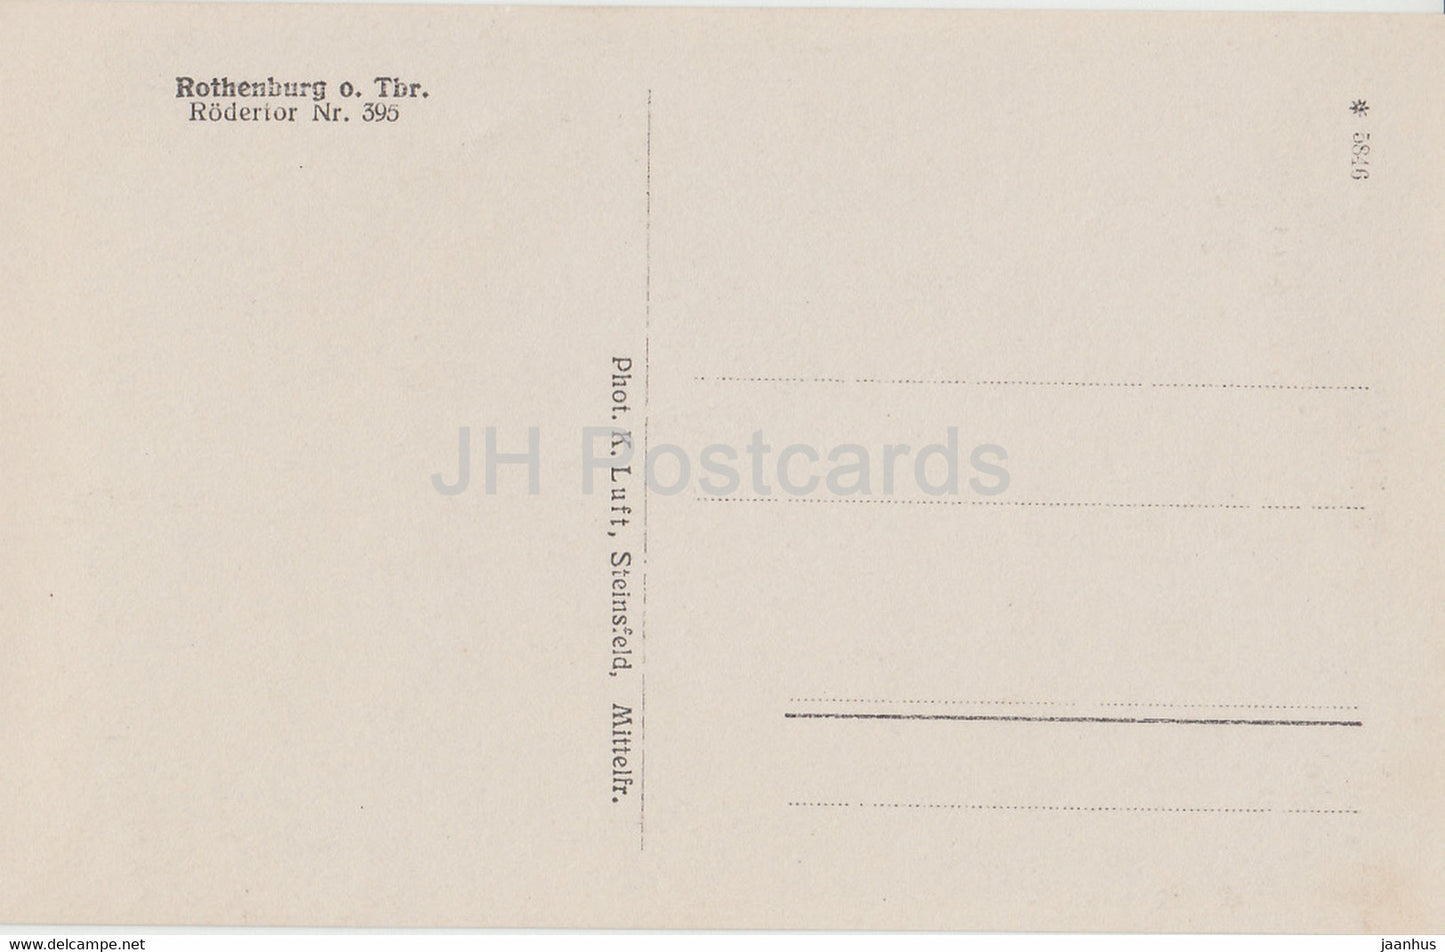 Rothenburg o d Tauber - Rodertor - 395 - old postcard - Germany - unused